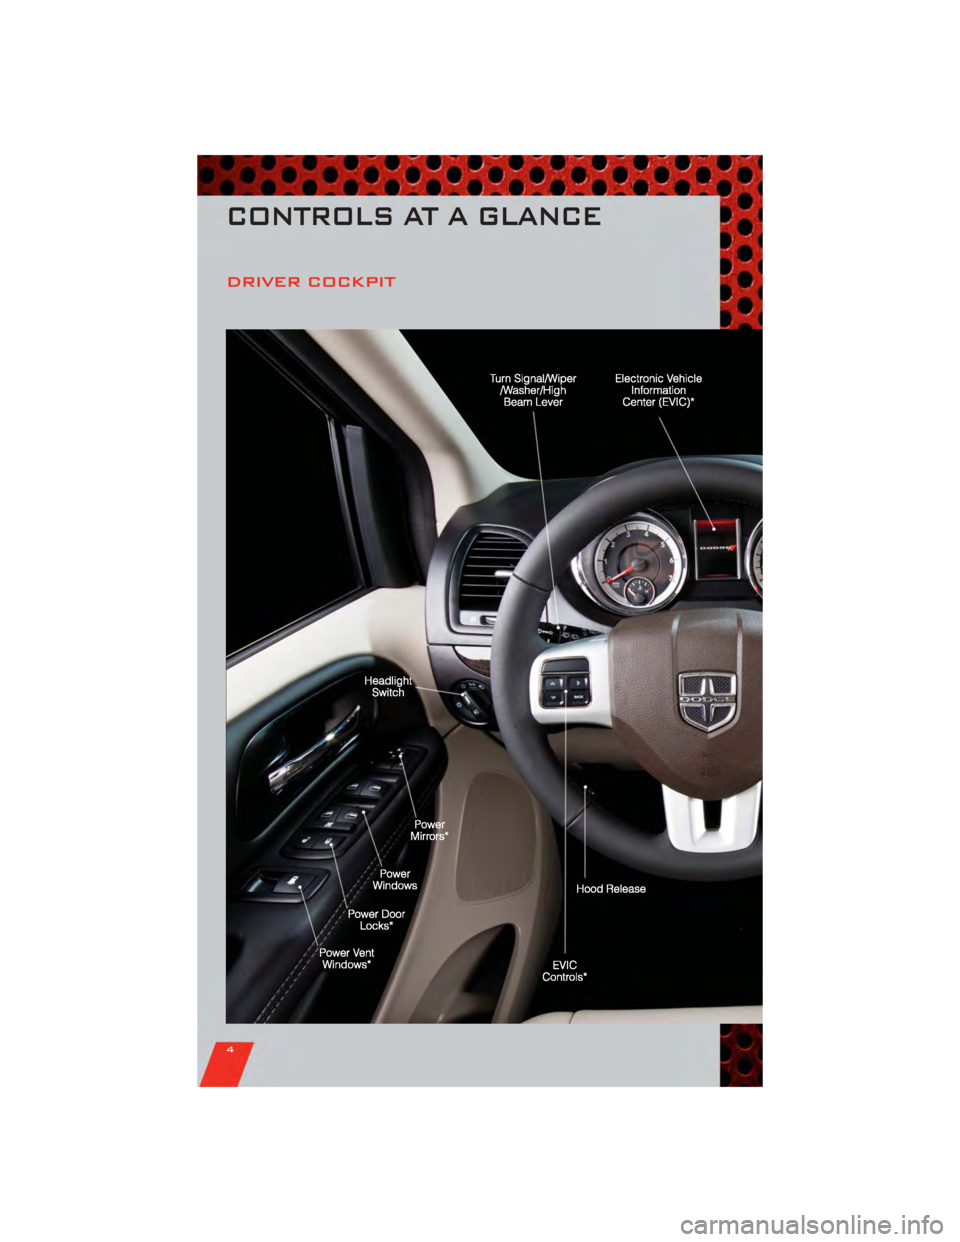 DODGE GRAND CARAVAN 2011 5.G User Guide DRIVER COCKPIT
CONTROLS AT A GLANCE
4 